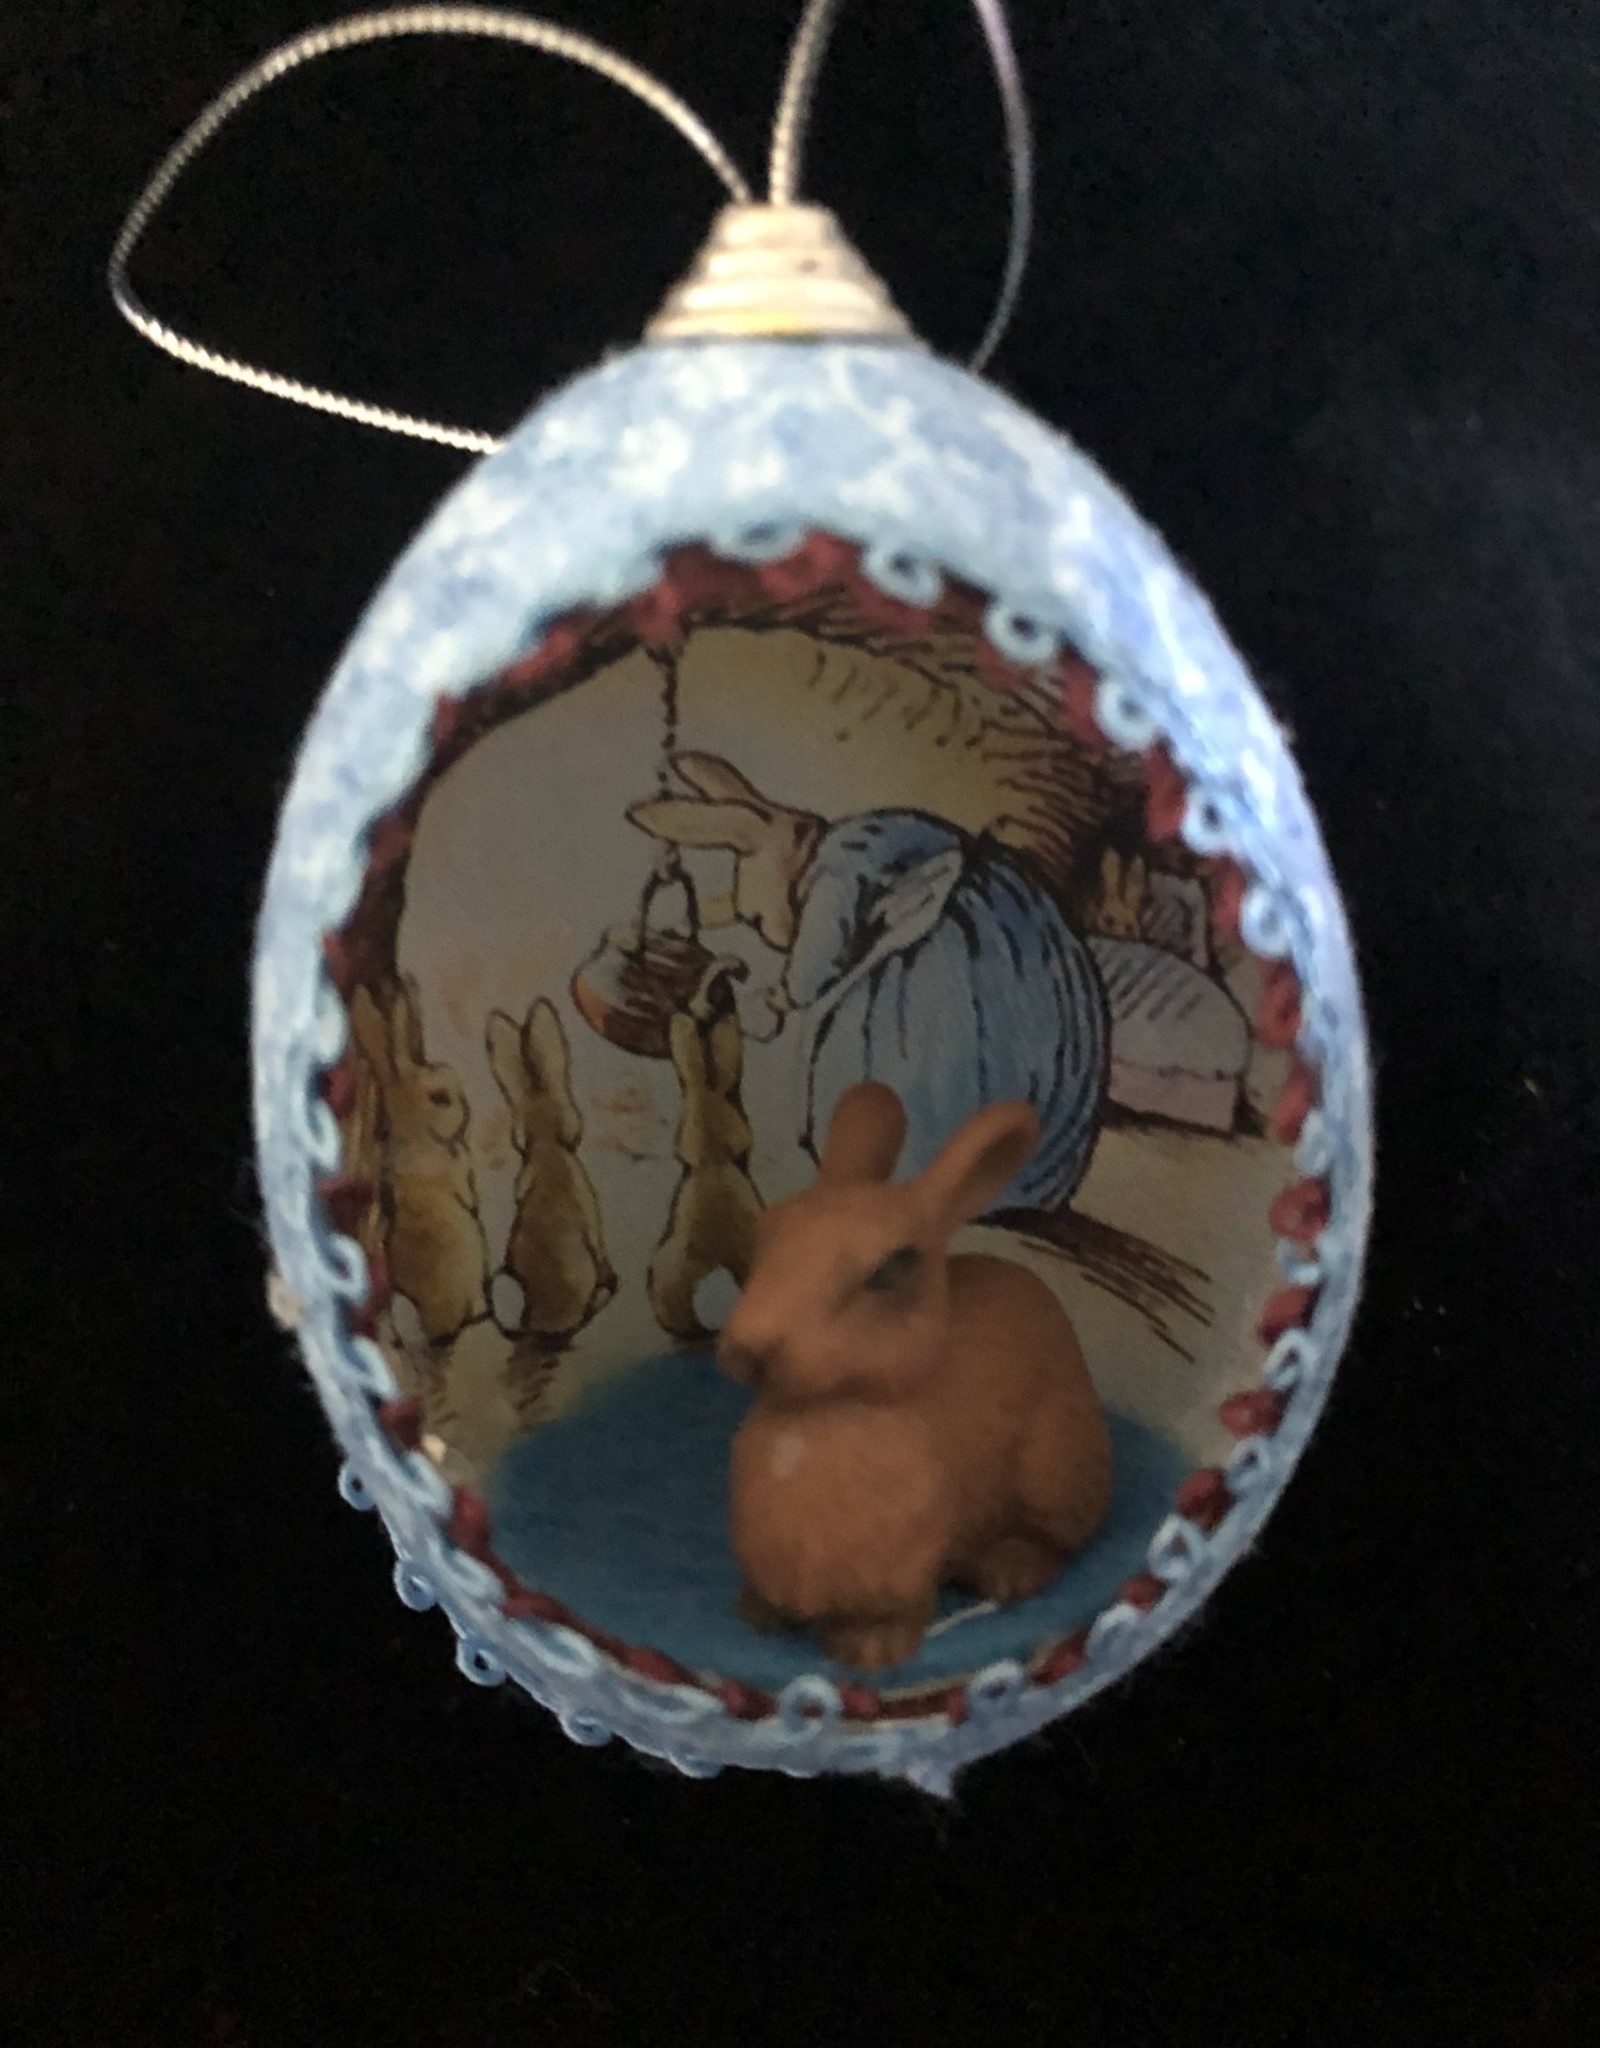 Ammi Brooks Mother Rabbit/Bird/Beatrix Potter Real Egg Ornament